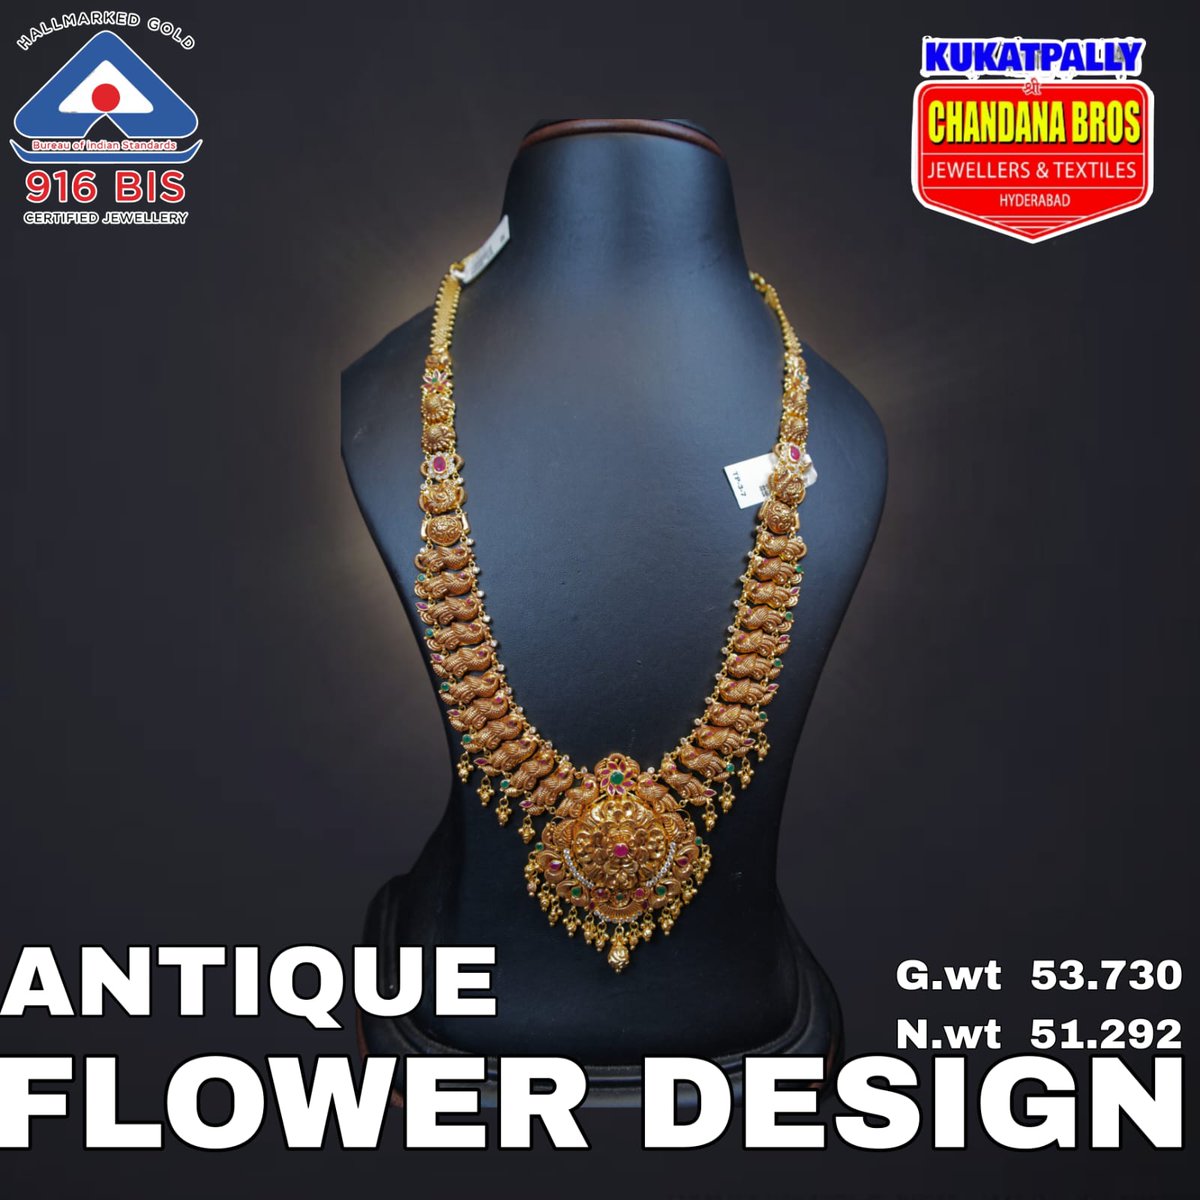 Antique Flower Design
G.wt : 53.730 gms, N.wt : 51.292 gms
Designed by Chandana Brothers KPHB.
For more details Call/WhatsApp +919704477744
.
.
.
.
.
#antiqueharam #haram #longharam #fashion #jewels #style #lastestjewellery #bridaljewellery #heavynecklaces #hallmarkjewellery